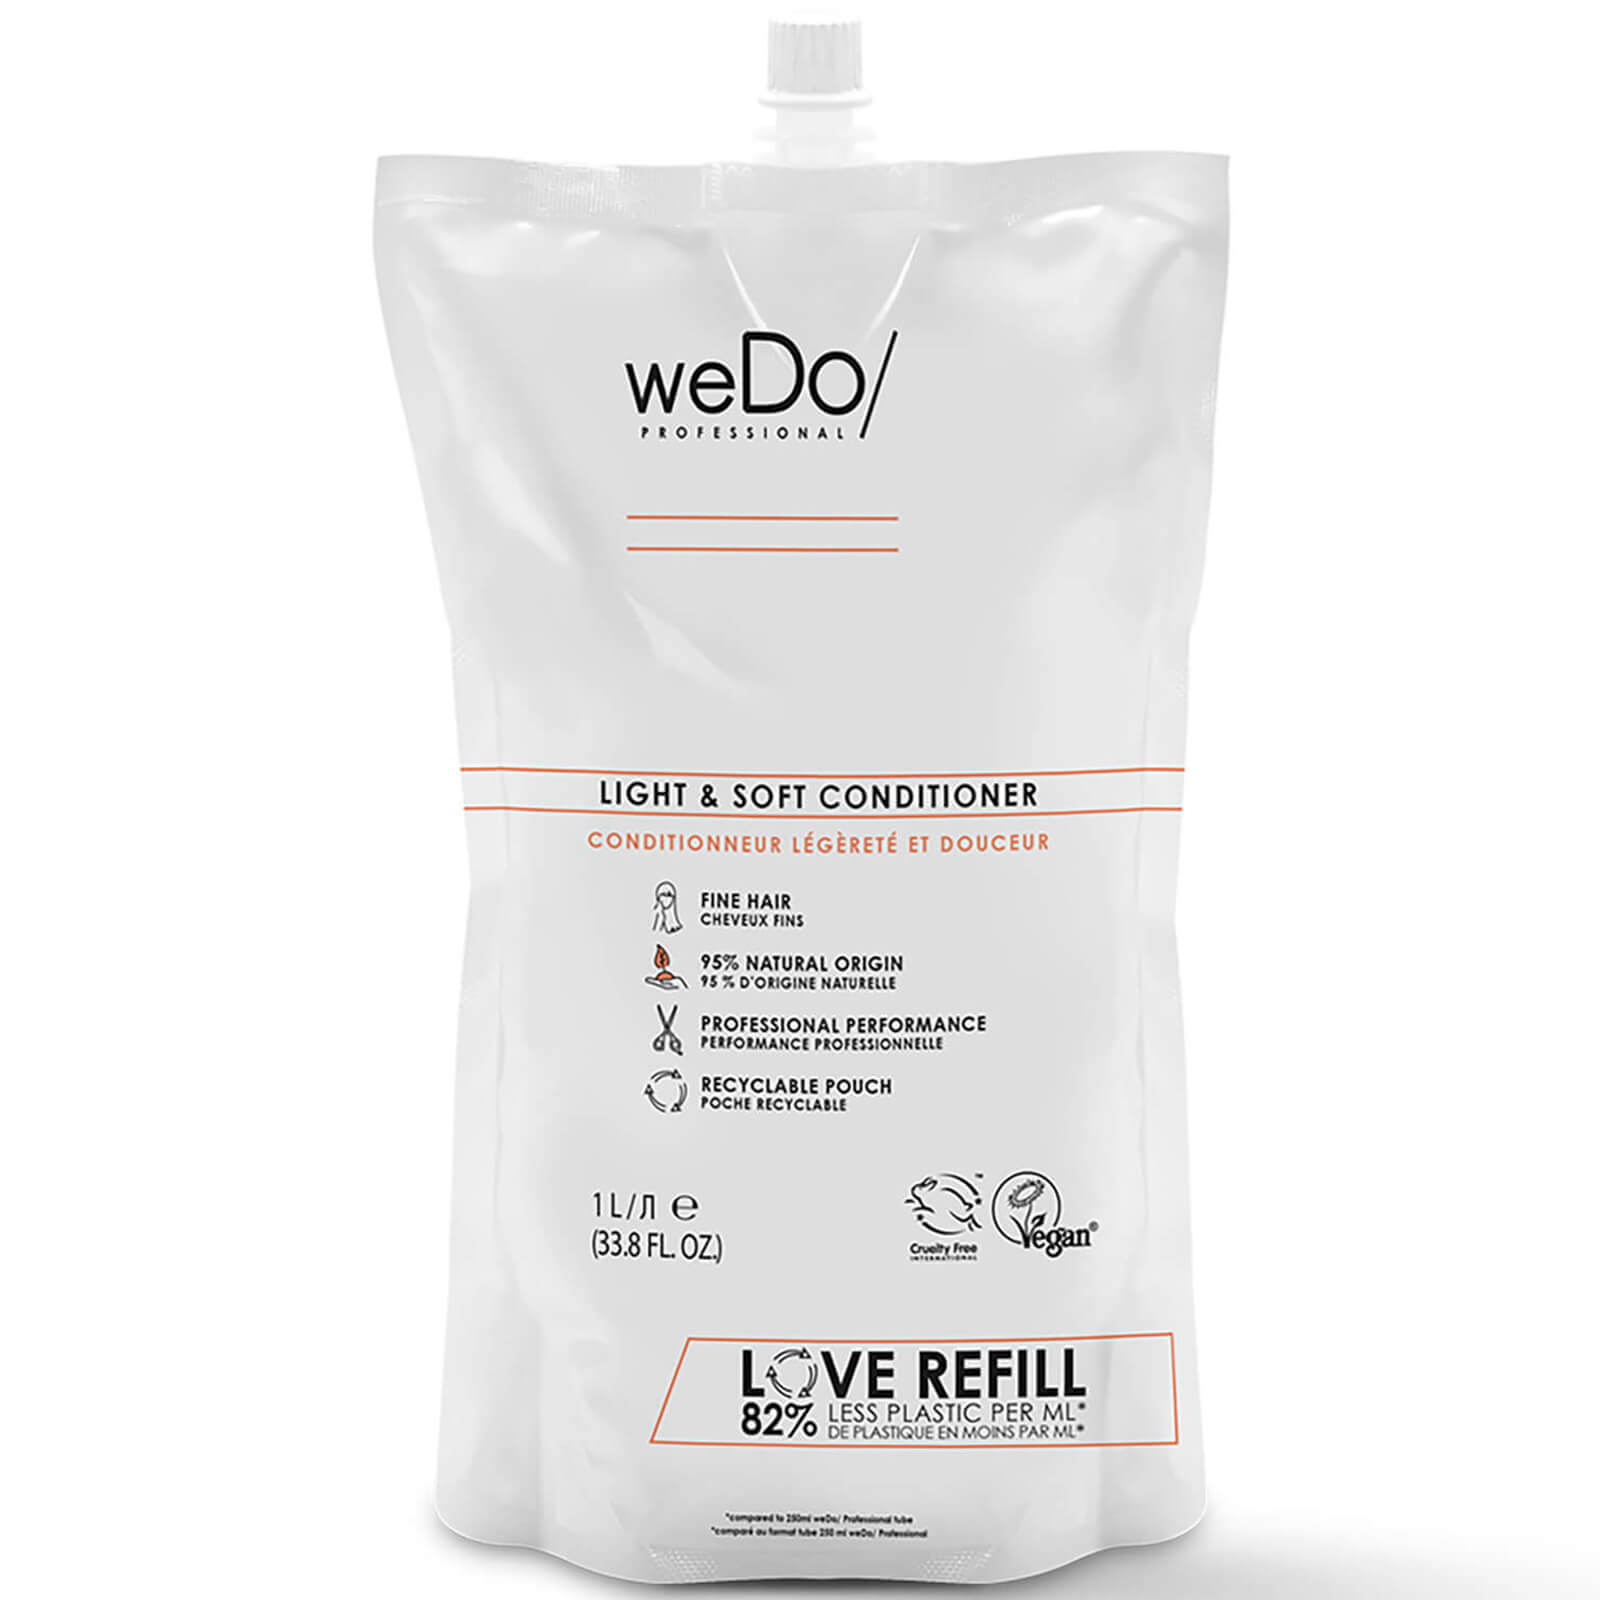 Wedo/ Professional Light & Soft - Conditioner Refill 1000ml